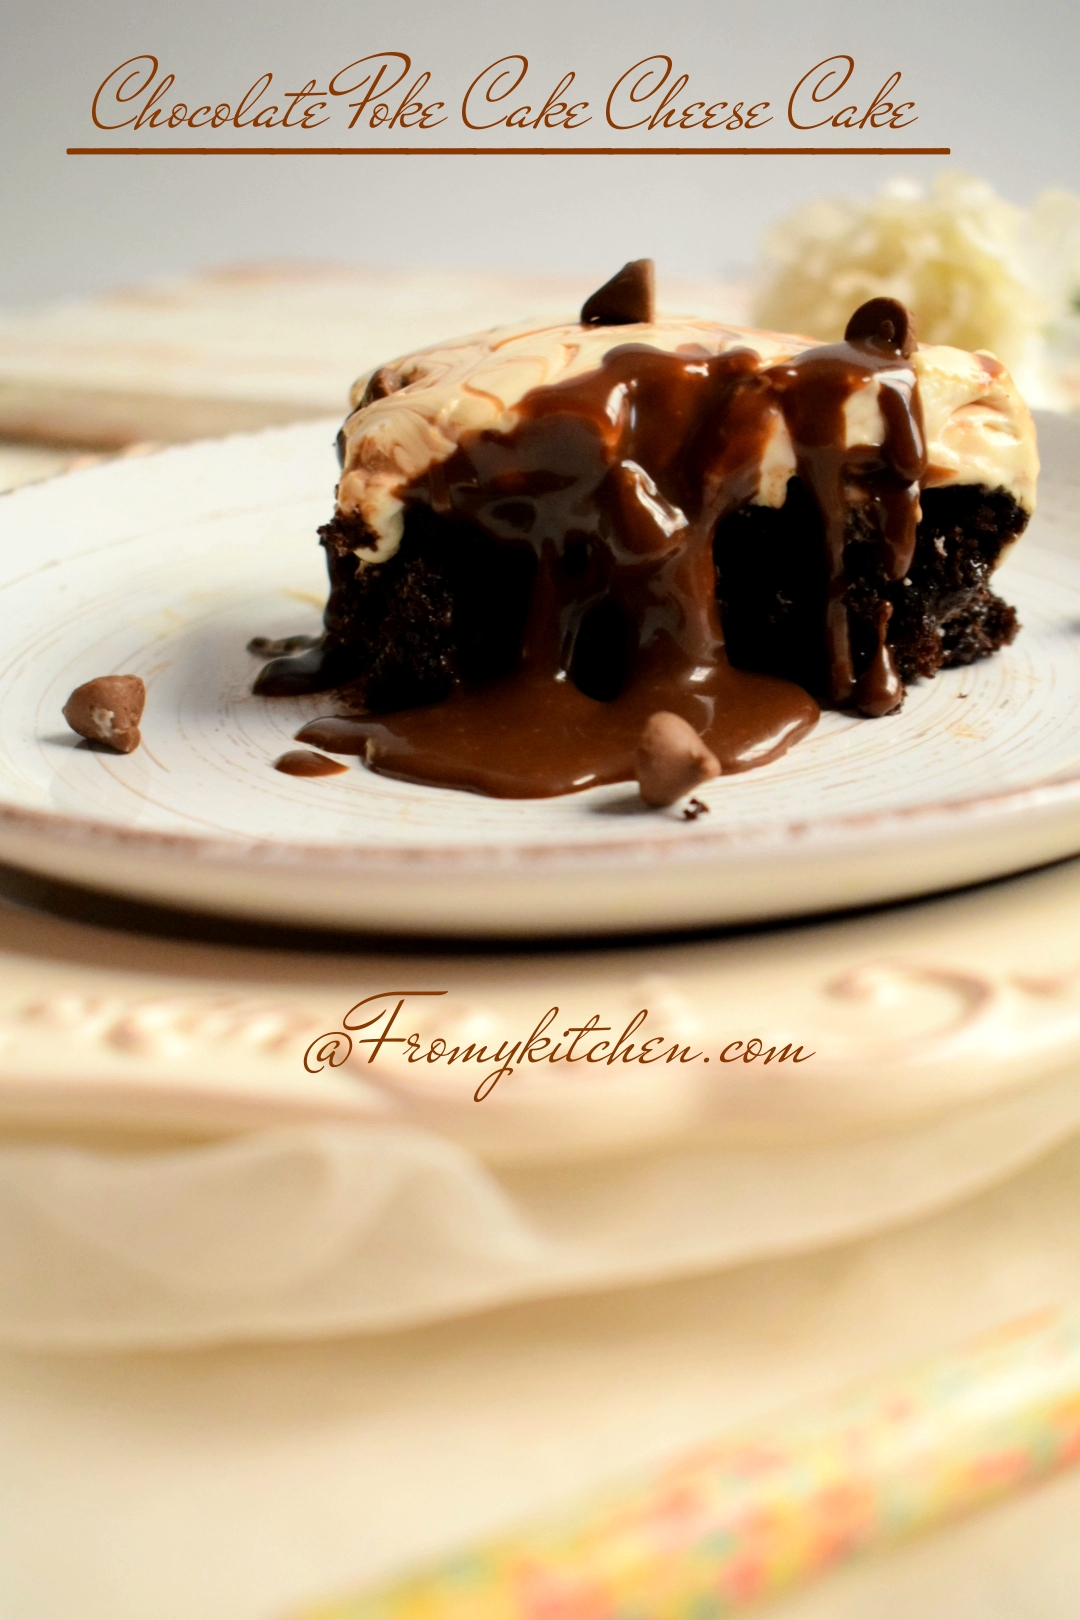 Chocolate Poke Cake Cheesecake